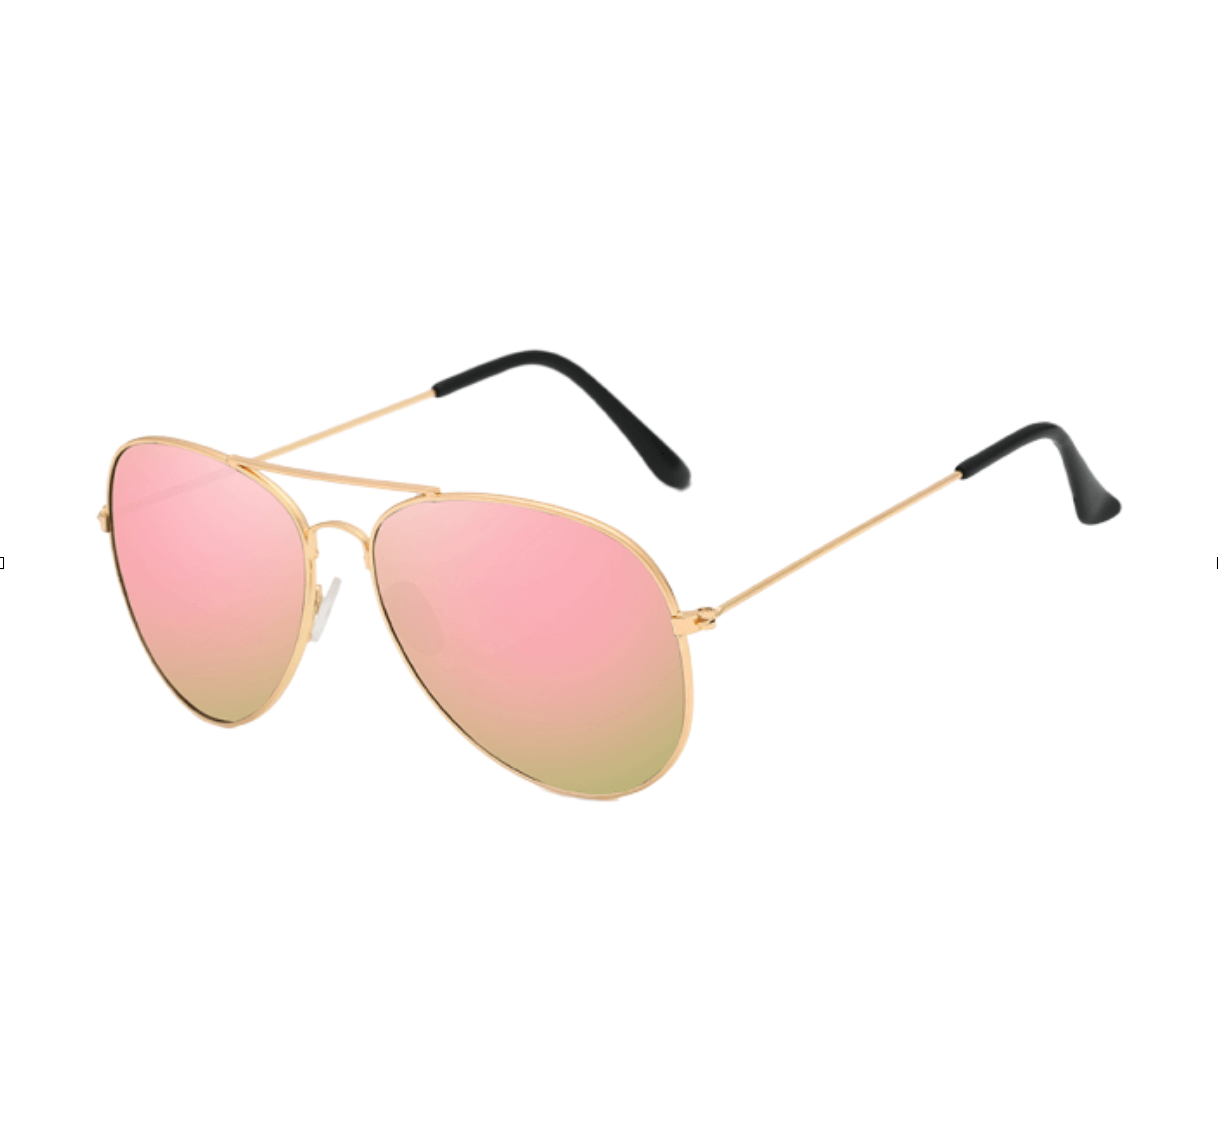 Sunglasses Manufacturer in China - Factorie Sunglasses - Aviator Sunglasses for Women